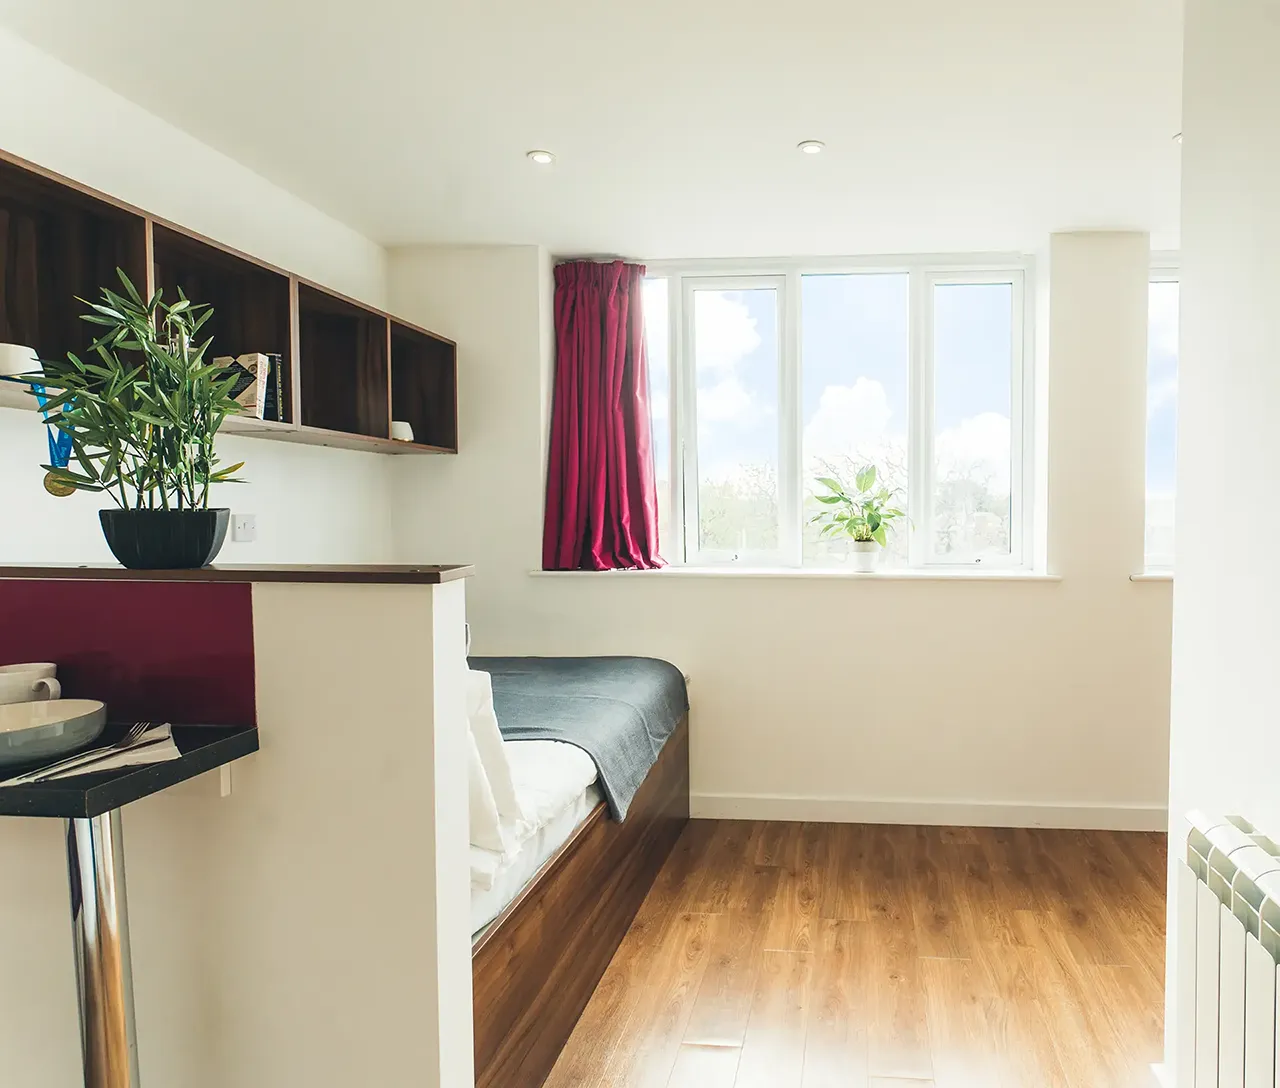 Lulworth Student Accommodation modern and light bedroom